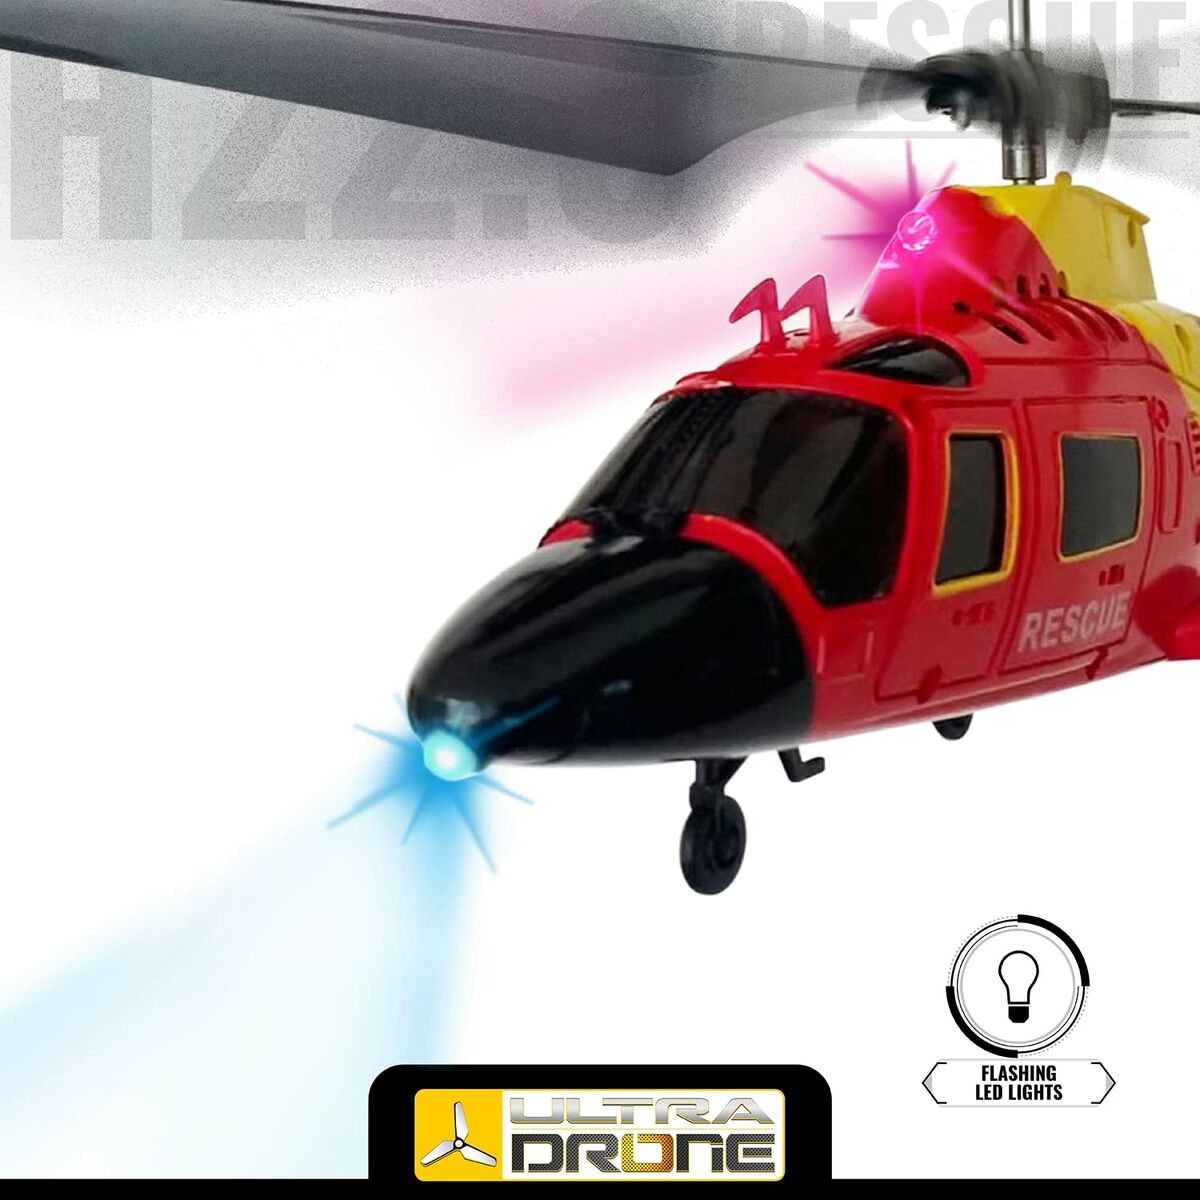 Helikopter op afstandsbediening Mondo Ultradrone H22 Rescue